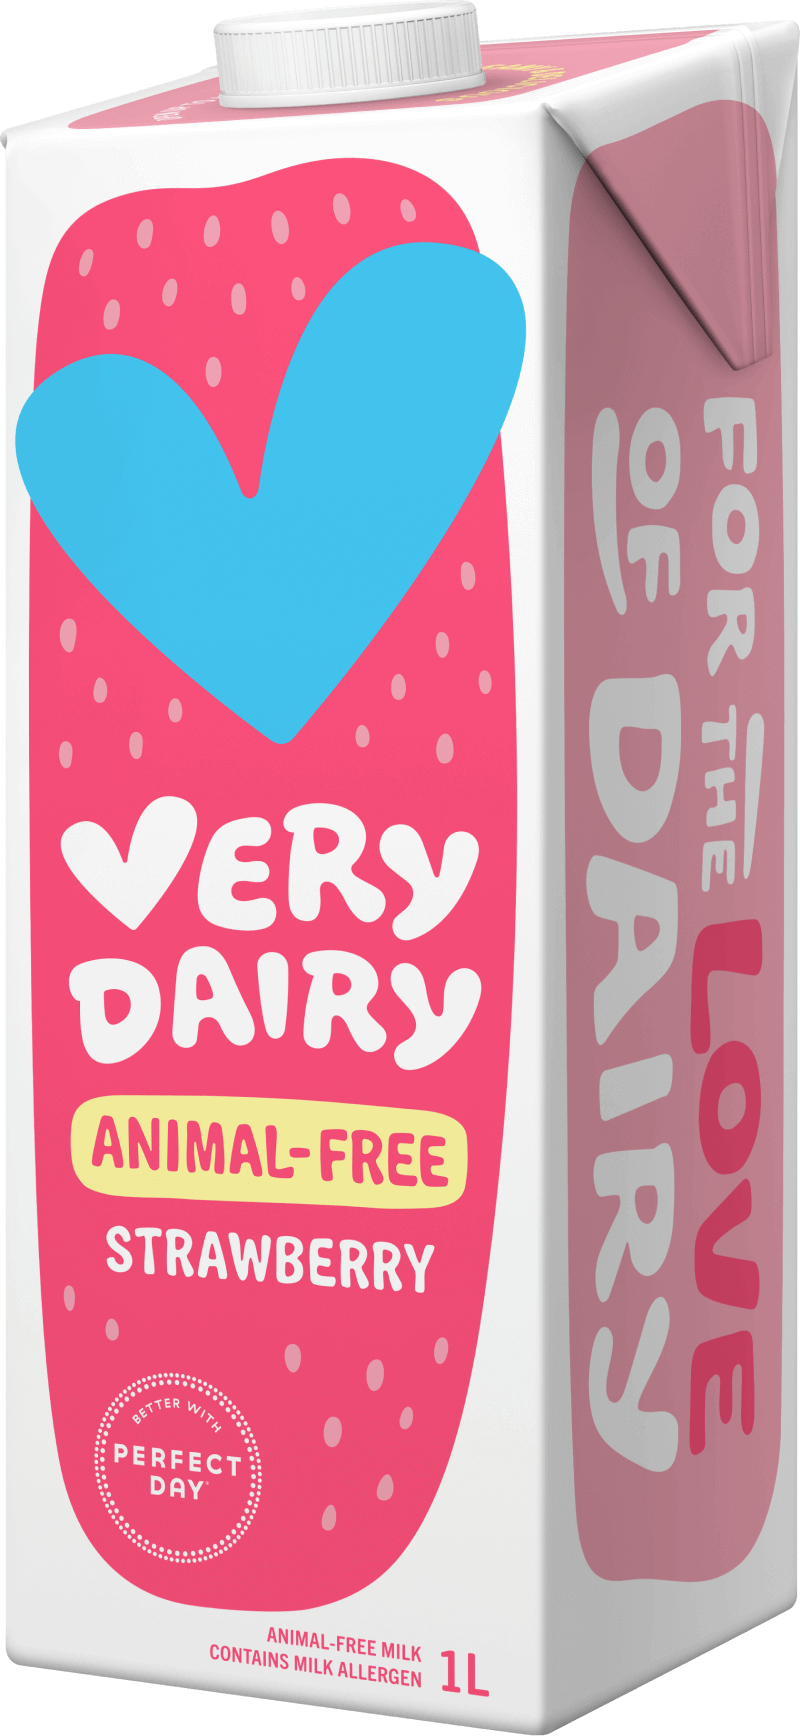 Very Dairy Animal-Free Strawberry